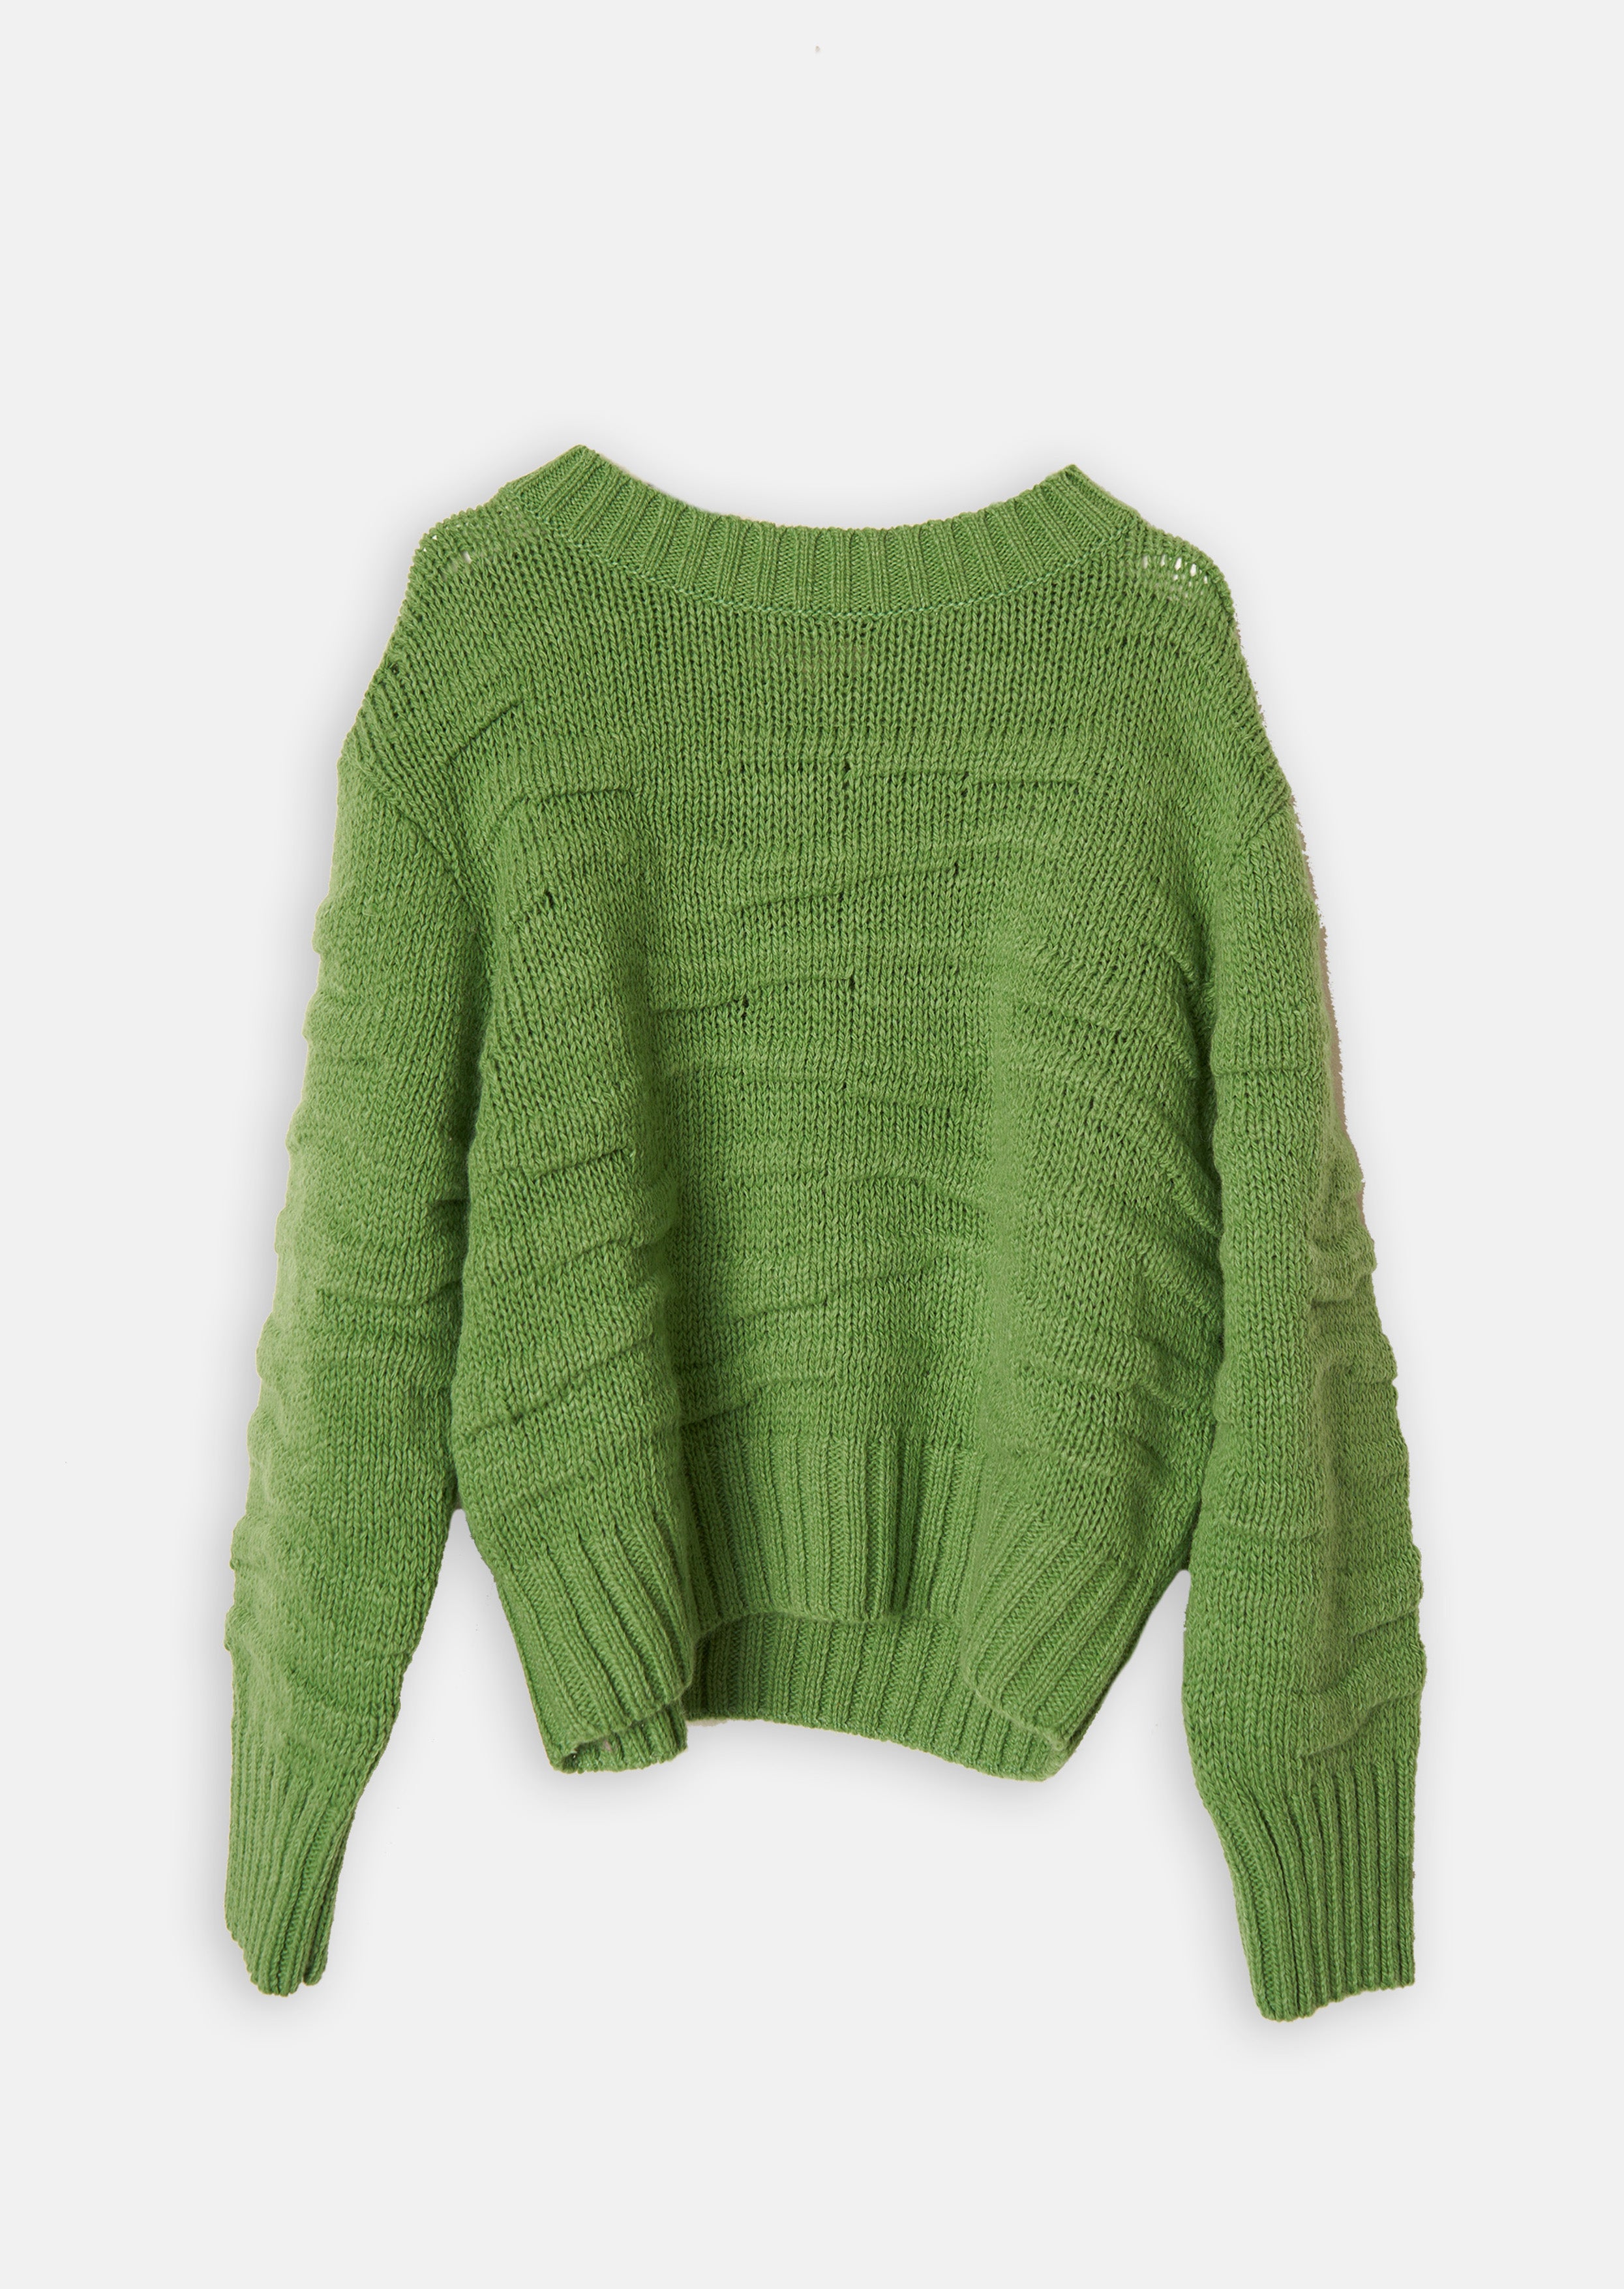 Girls Textured Green Knits Sweater